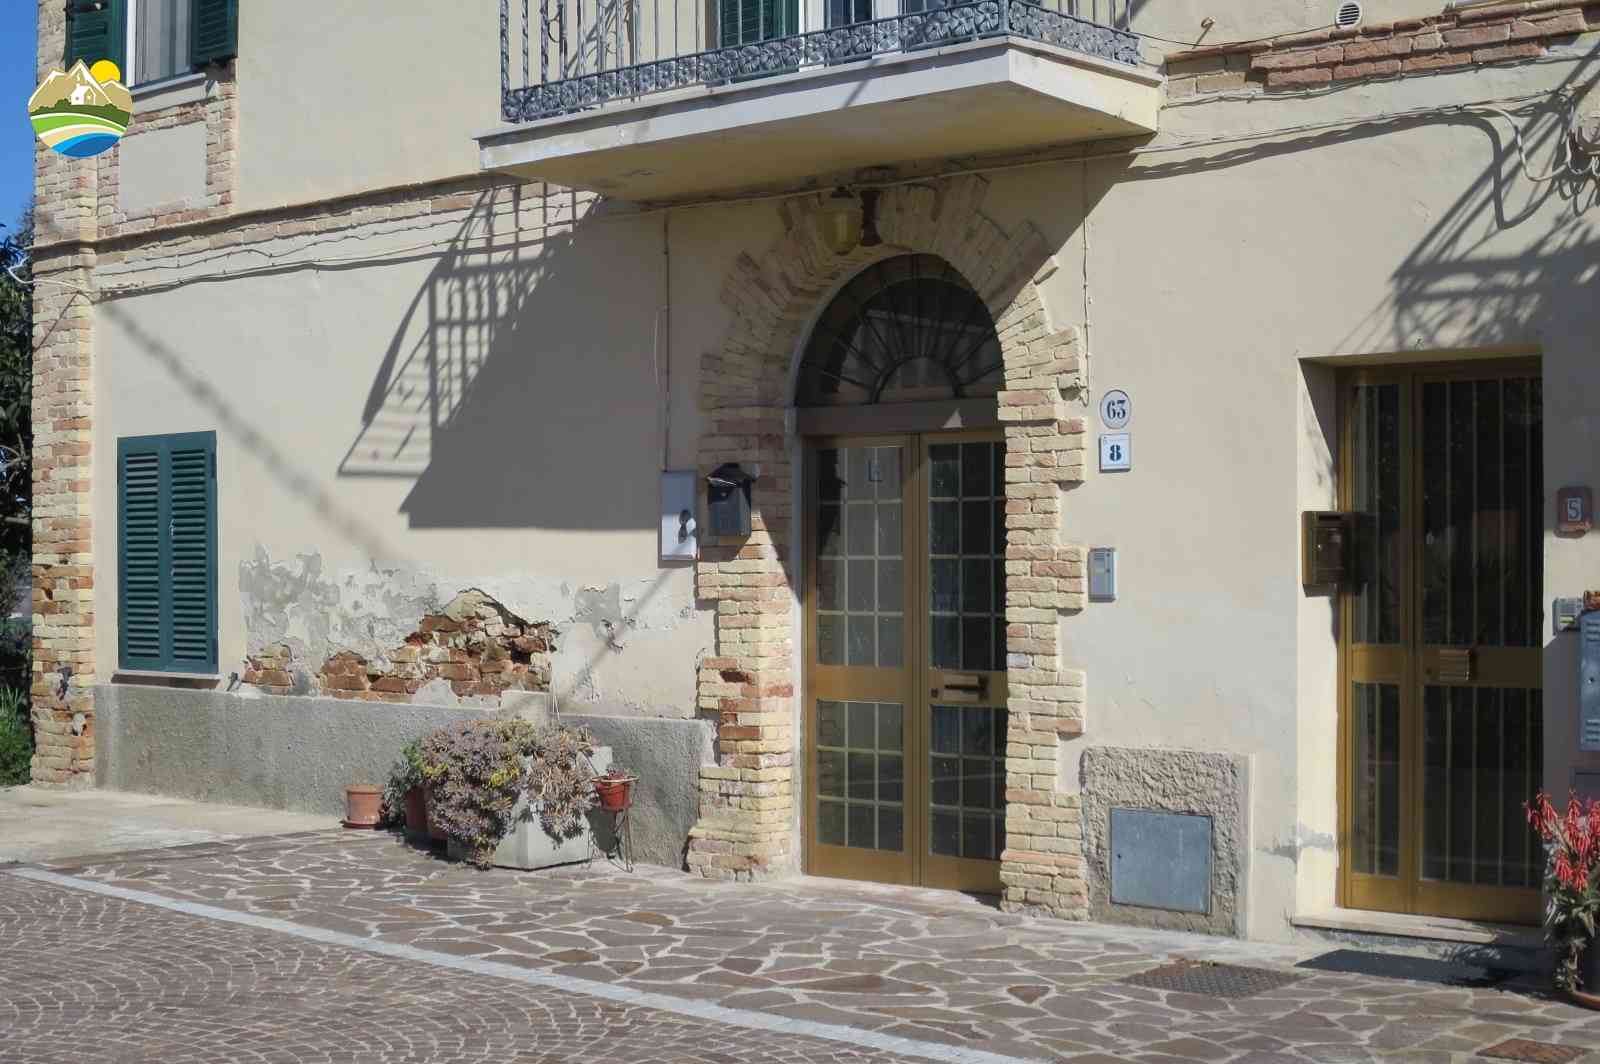 Townhouse Townhouse for sale Picciano (PE), Casa Rondine - Picciano - EUR 88.783 780